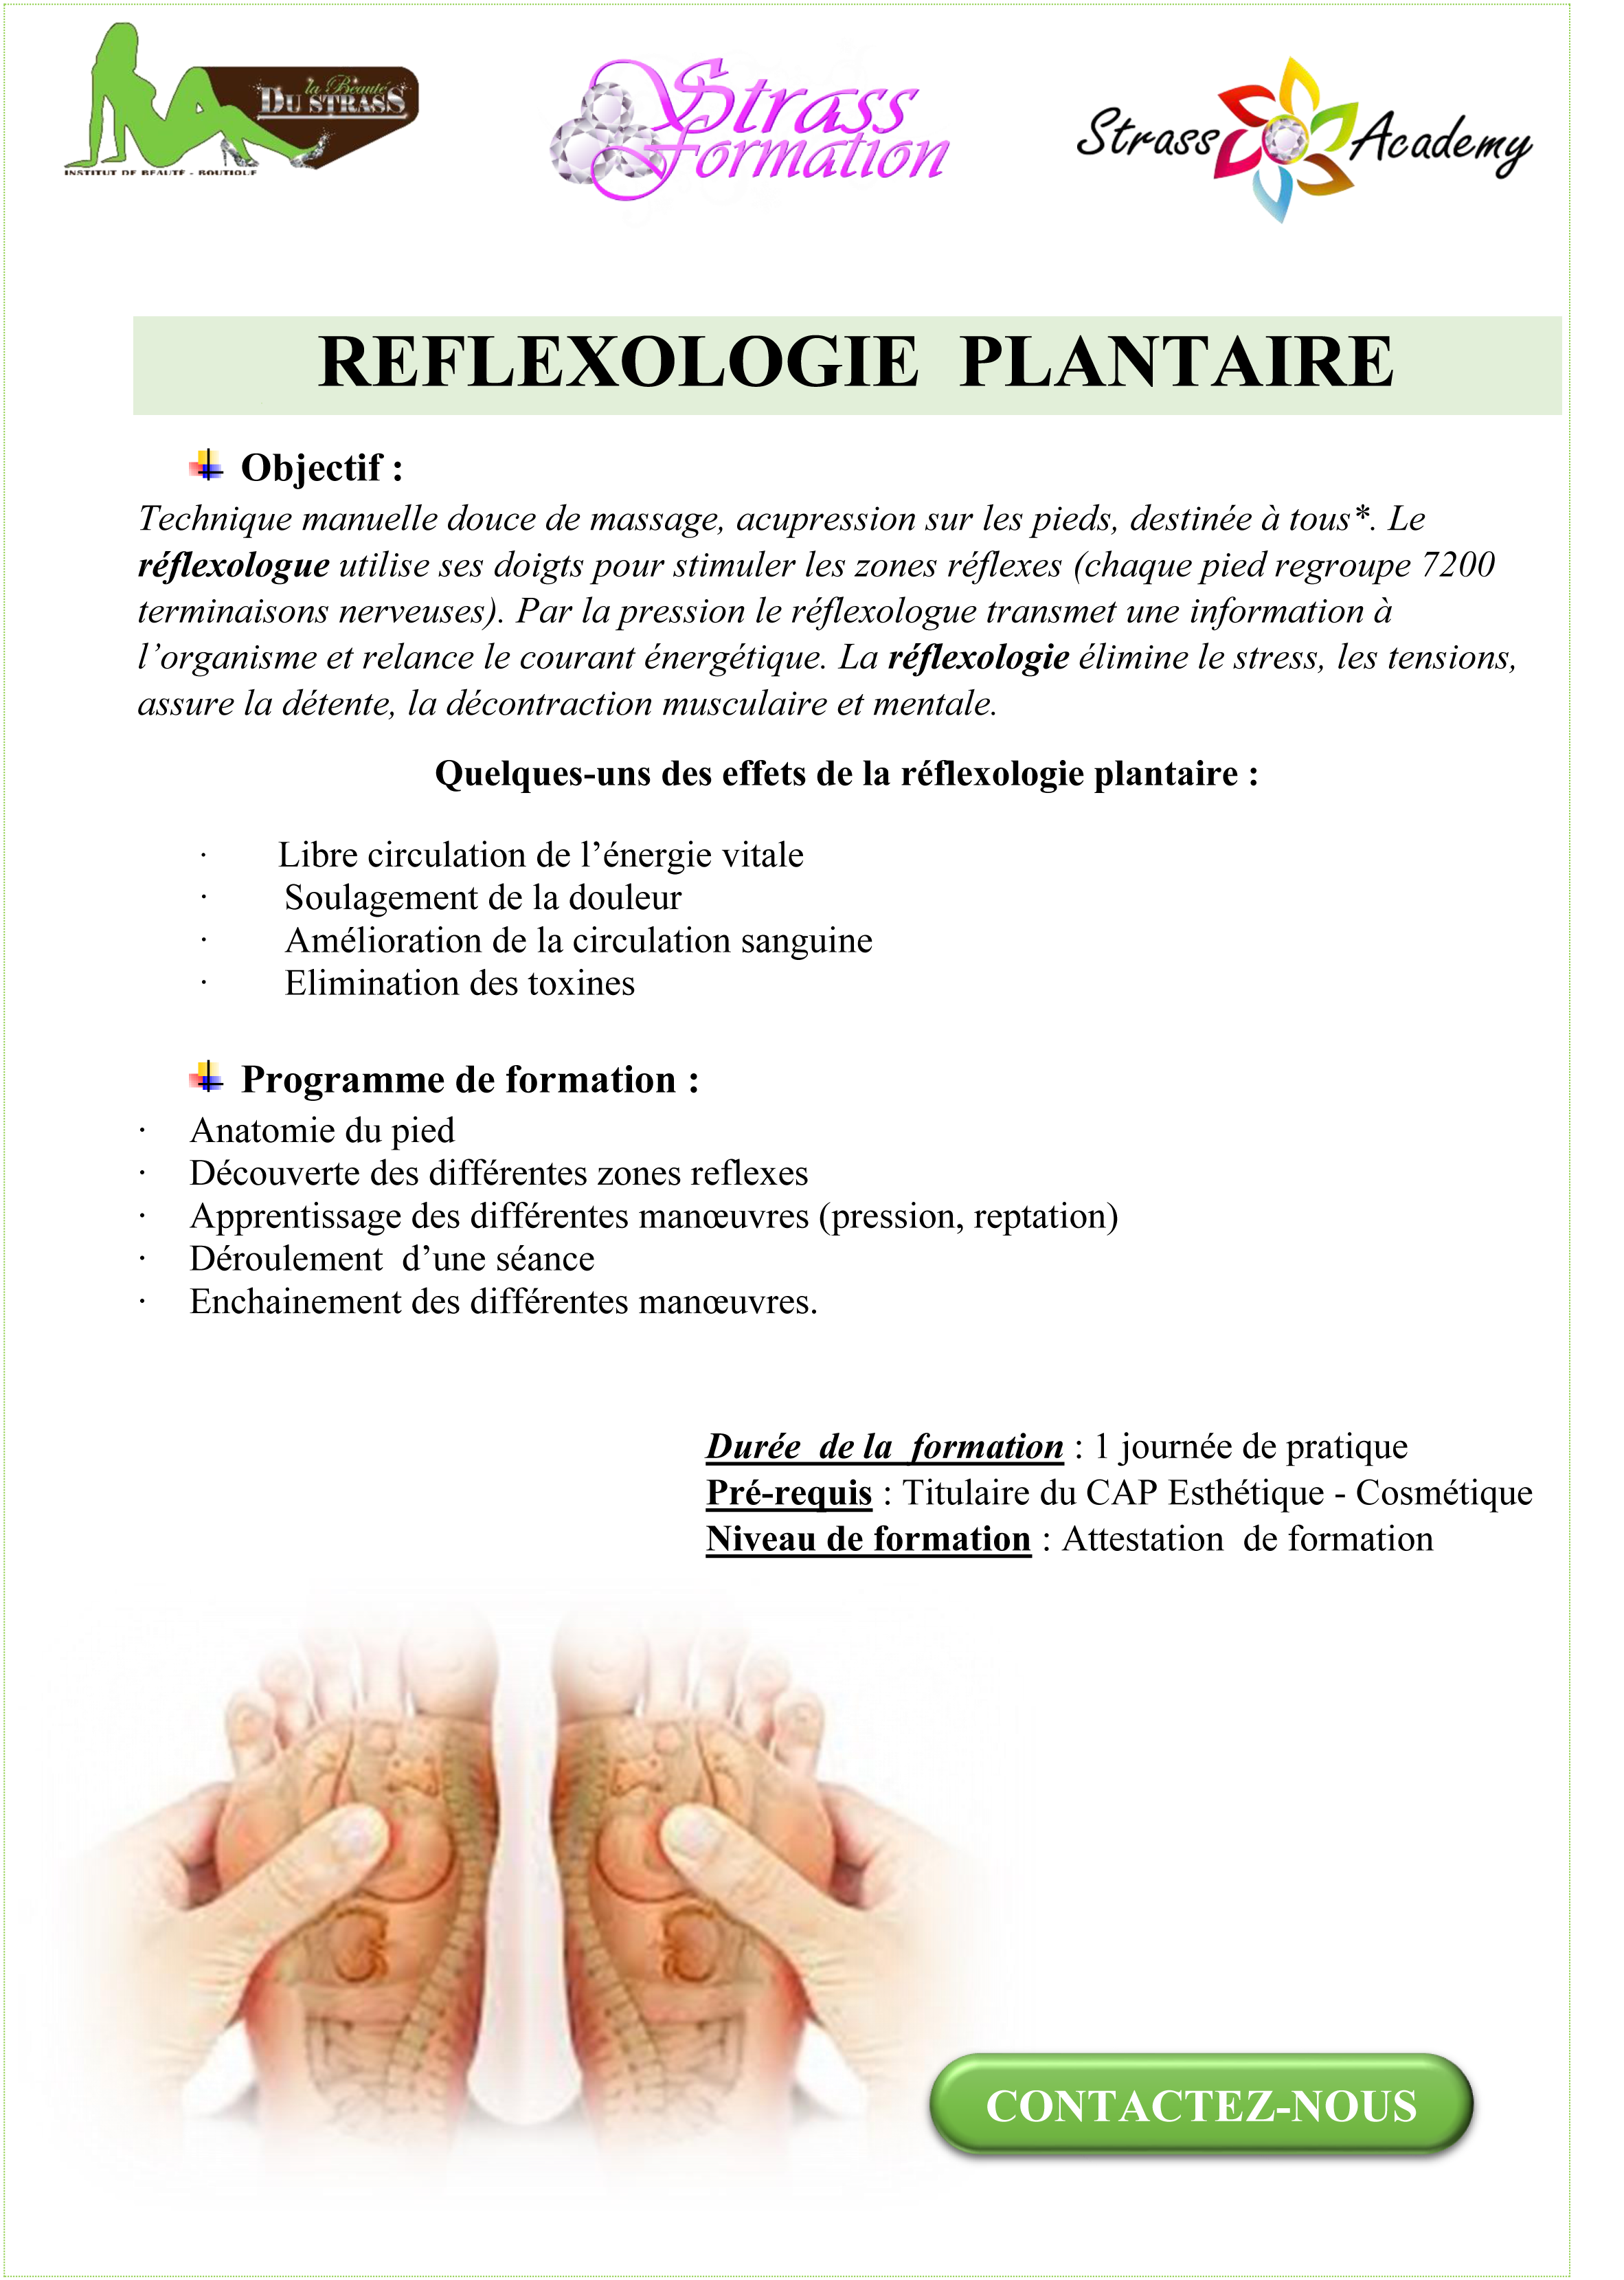 REFLEXOLOGIE PLANTAIRE